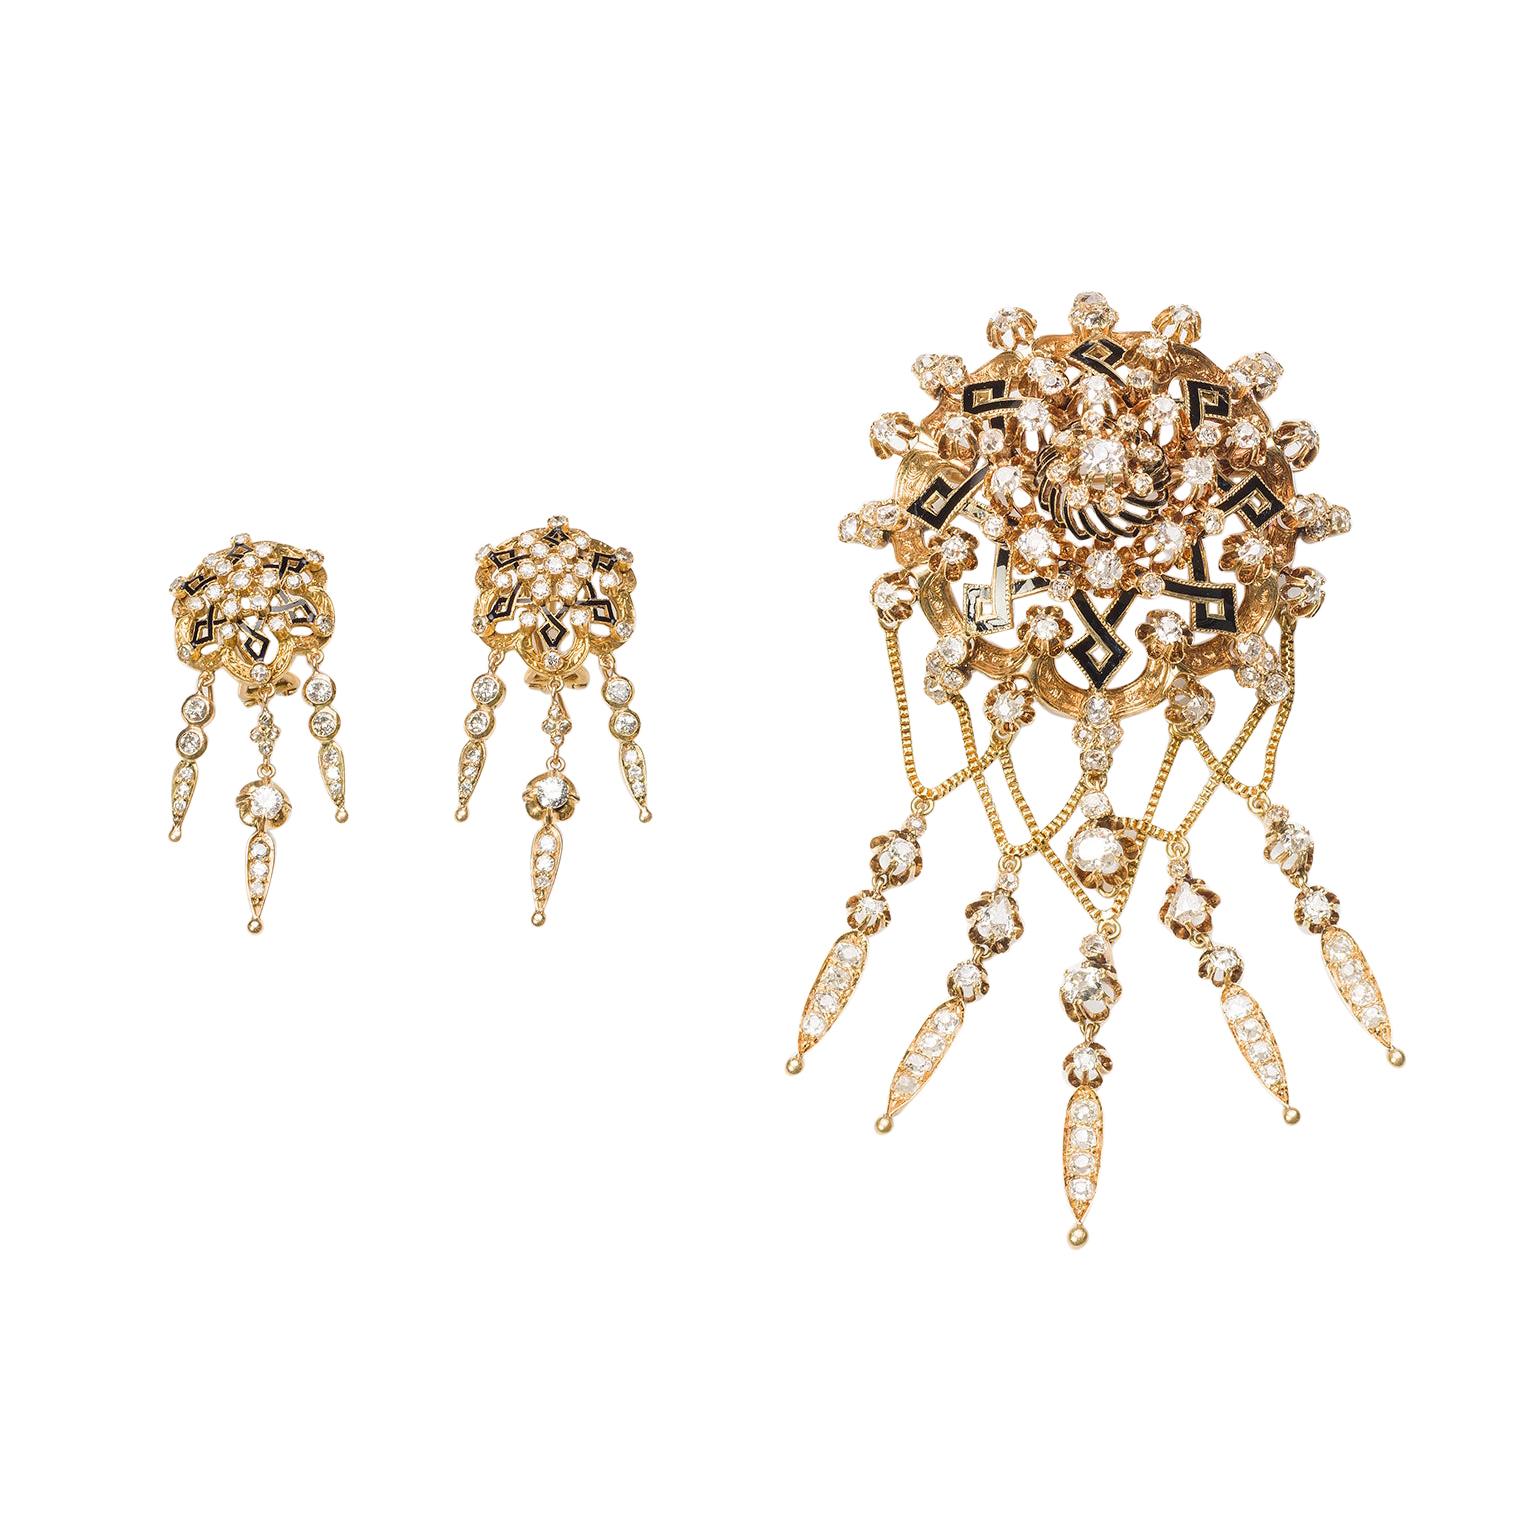 Renaissance Revival Spanish Neo-Renaissance Set Brooch, Earrings, Bracelet and Ring in 18 Karat Gold